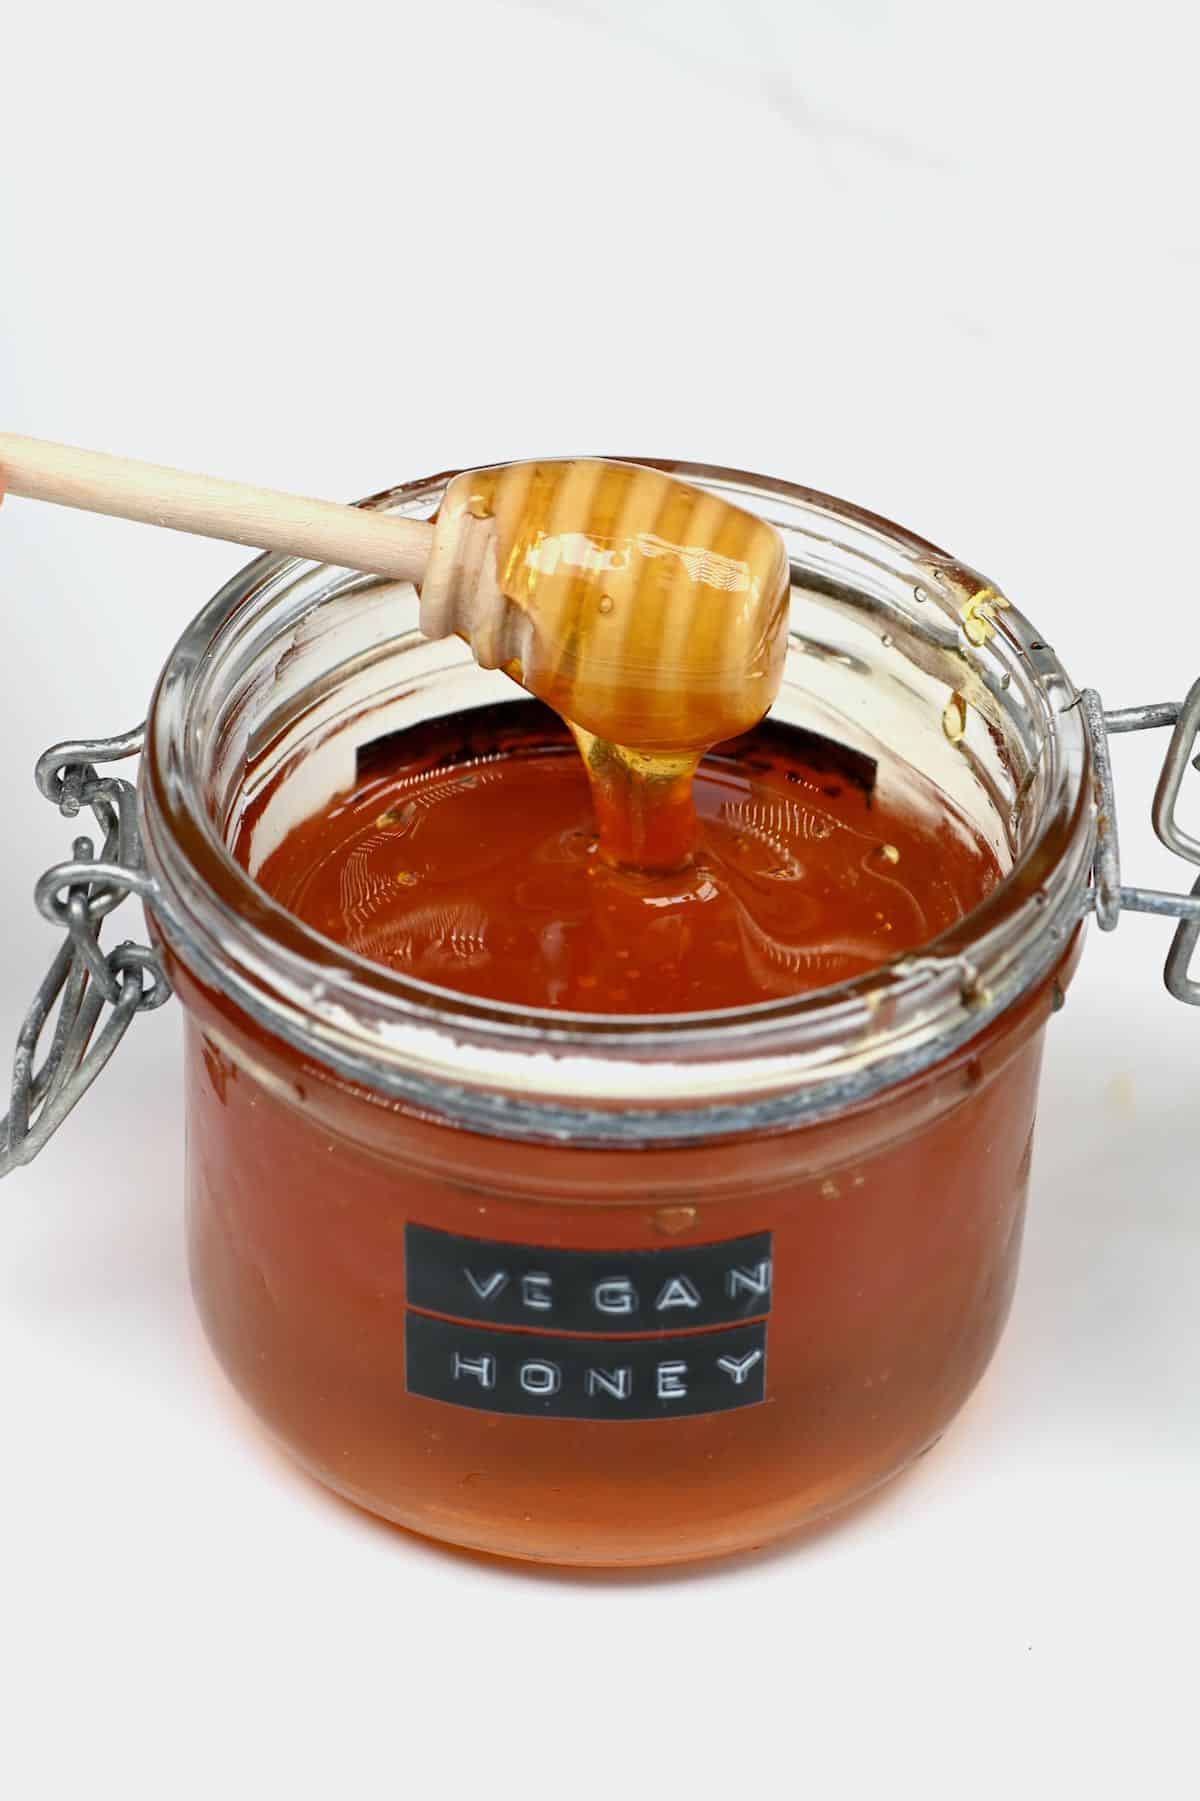 Vegan honey dripping in a jar